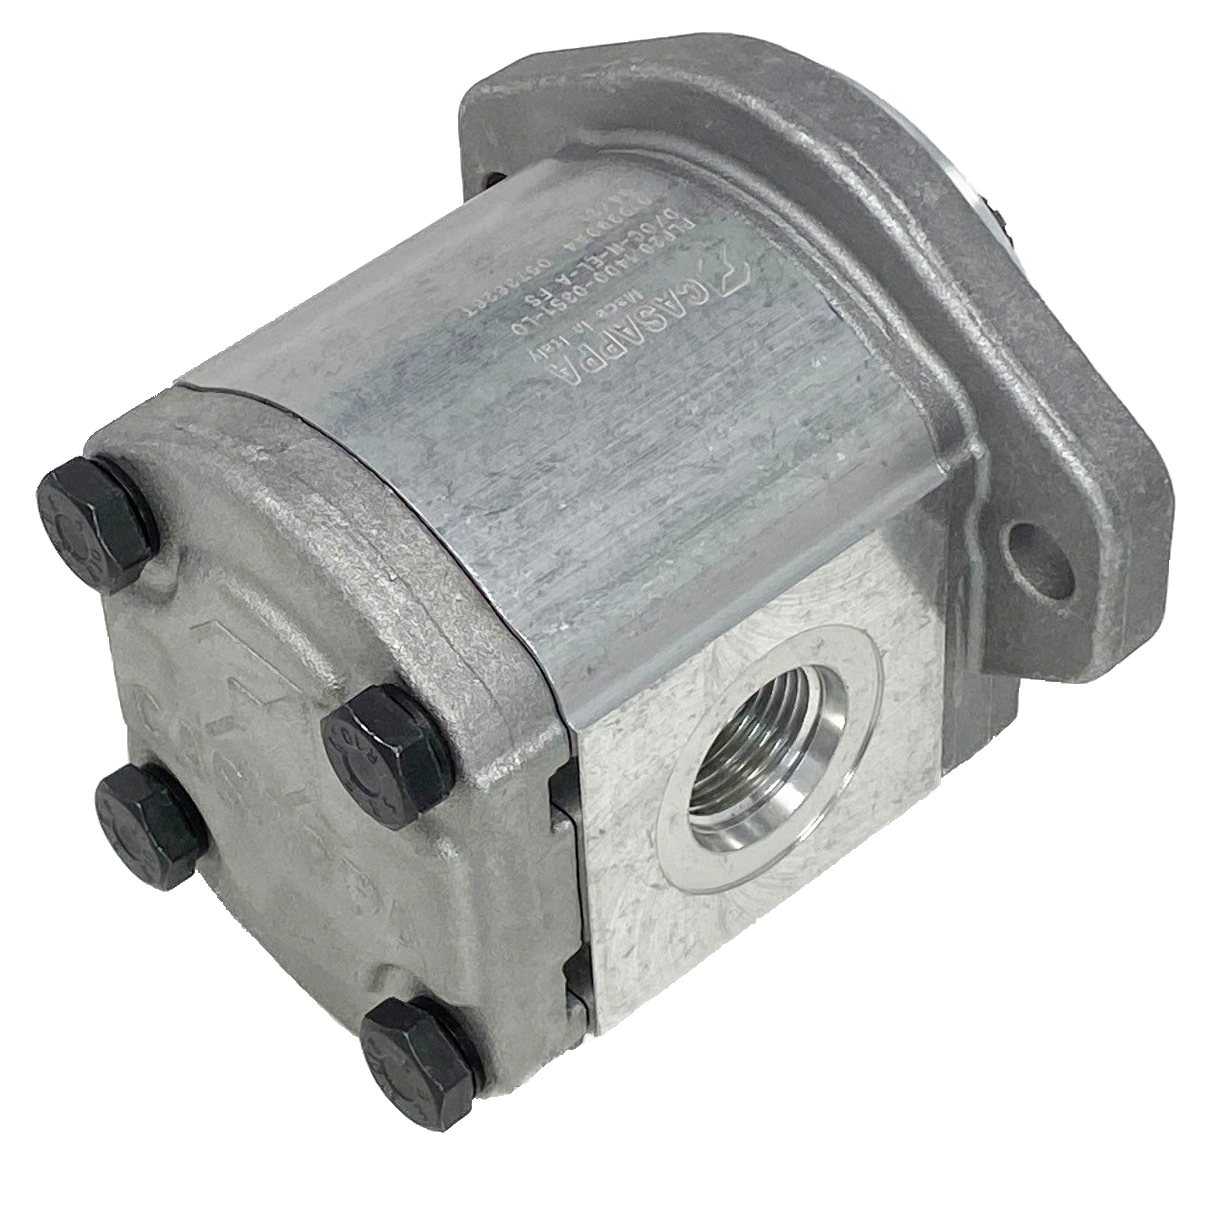 PLM20.20B0-03S1-LOC/OD-N-EL : Casappa Polaris Gear Motor, 21.14cc, 2900psi Rated, 3000RPM, Reversible Interior Drain, 9T 16/32dp Shaft, SAE A 2-Bolt Flange, 0.625 (5/8") #10 SAE Inlet, 0.75 (3/4") #12 SAE Outlet, Aluminum Body & Flange